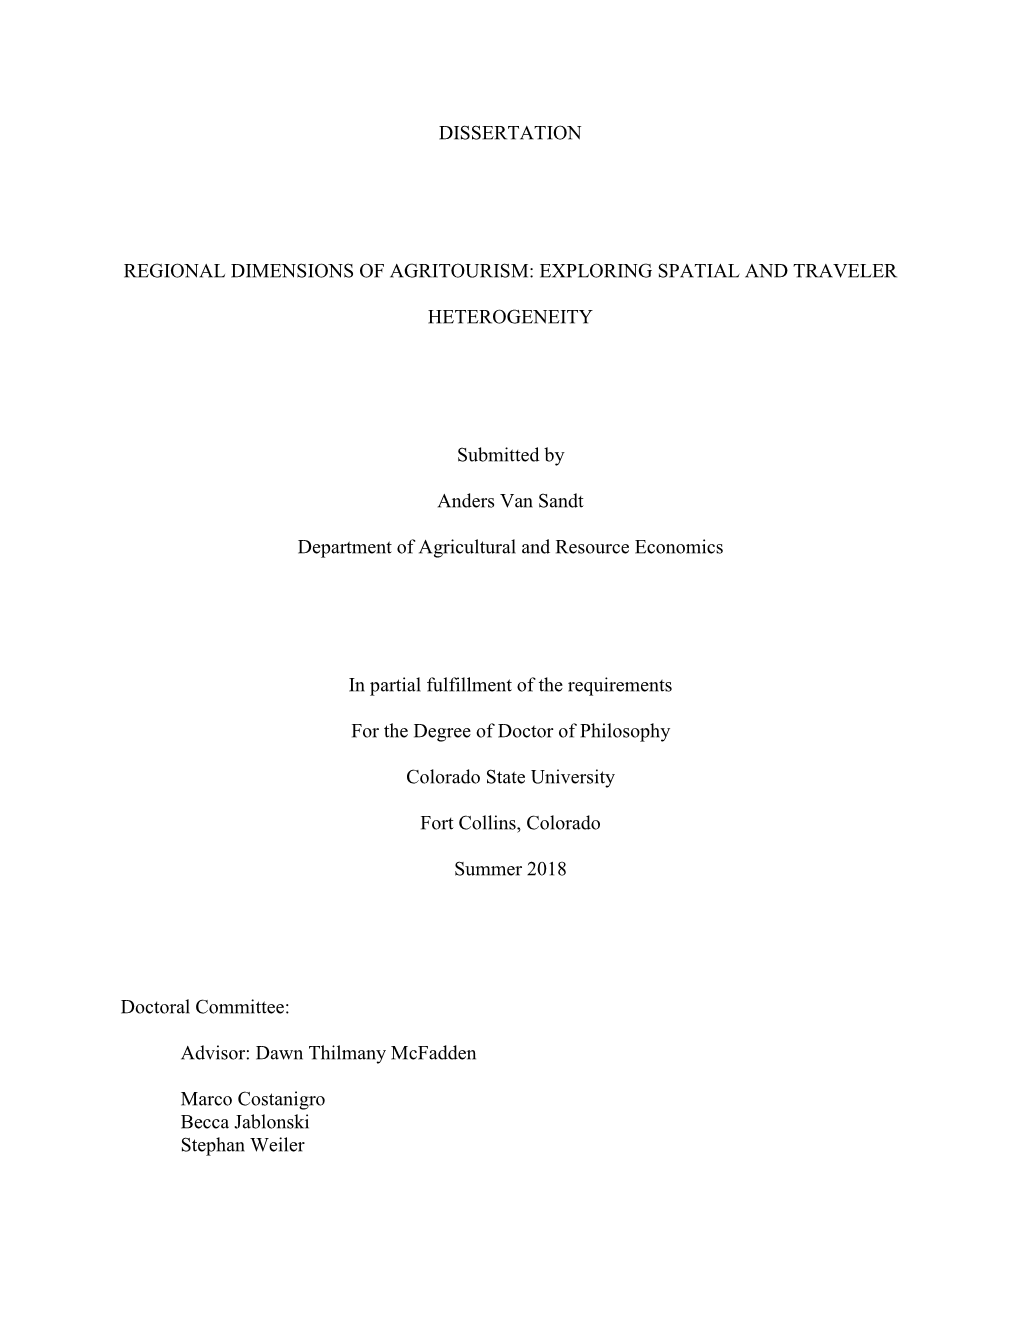 Dissertation Regional Dimensions of Agritourism